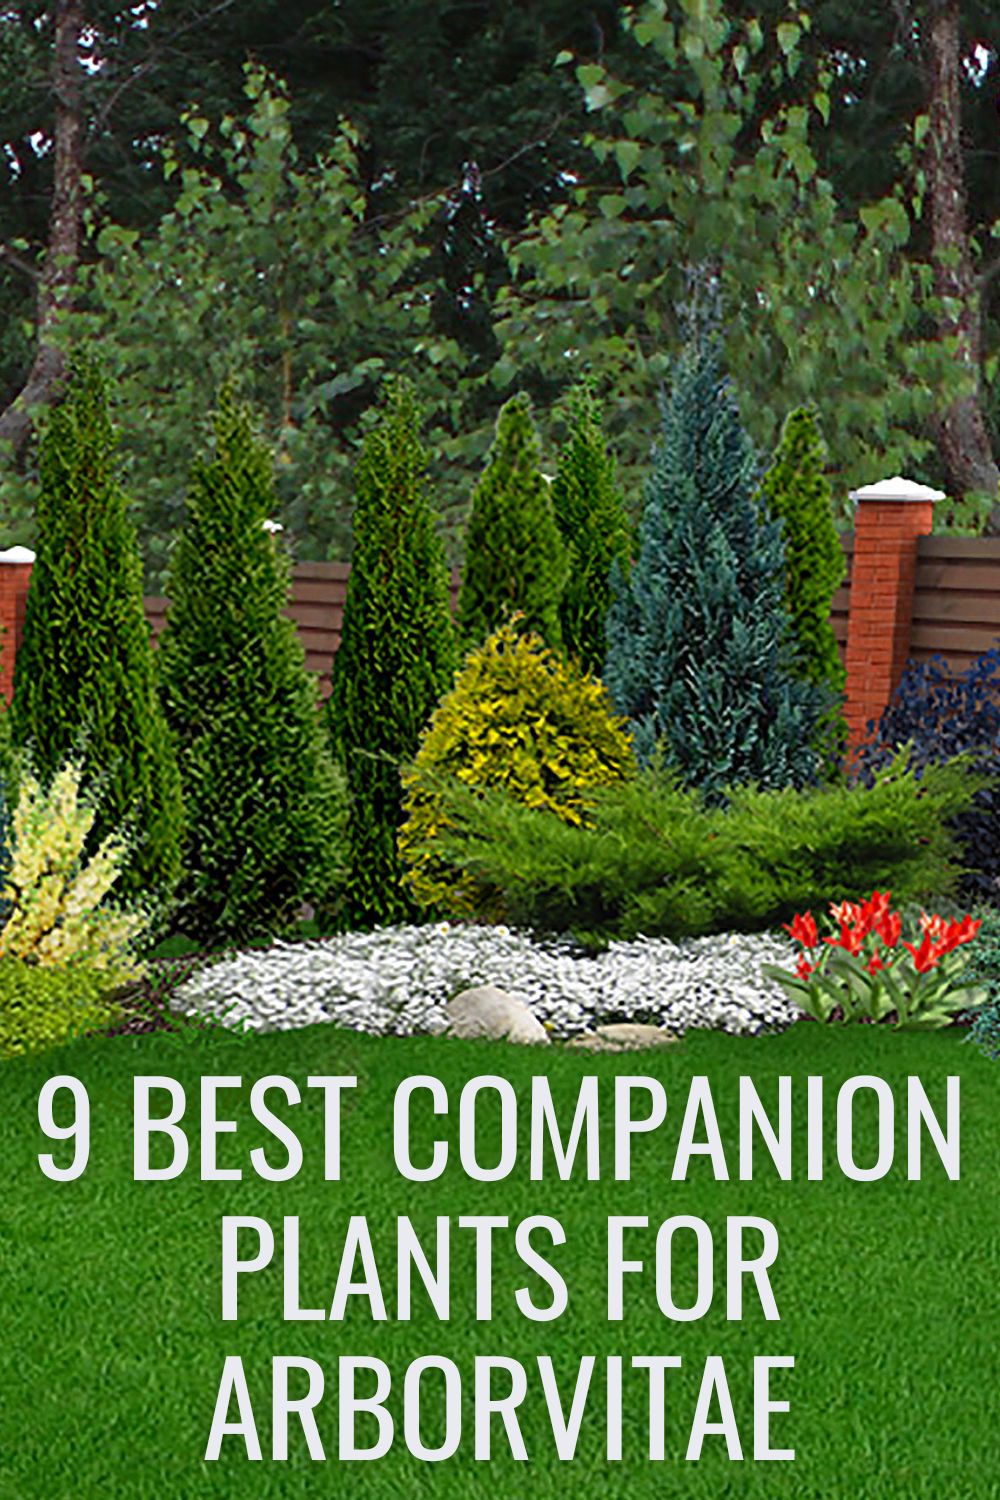 9 best companion plants for arborvitae.